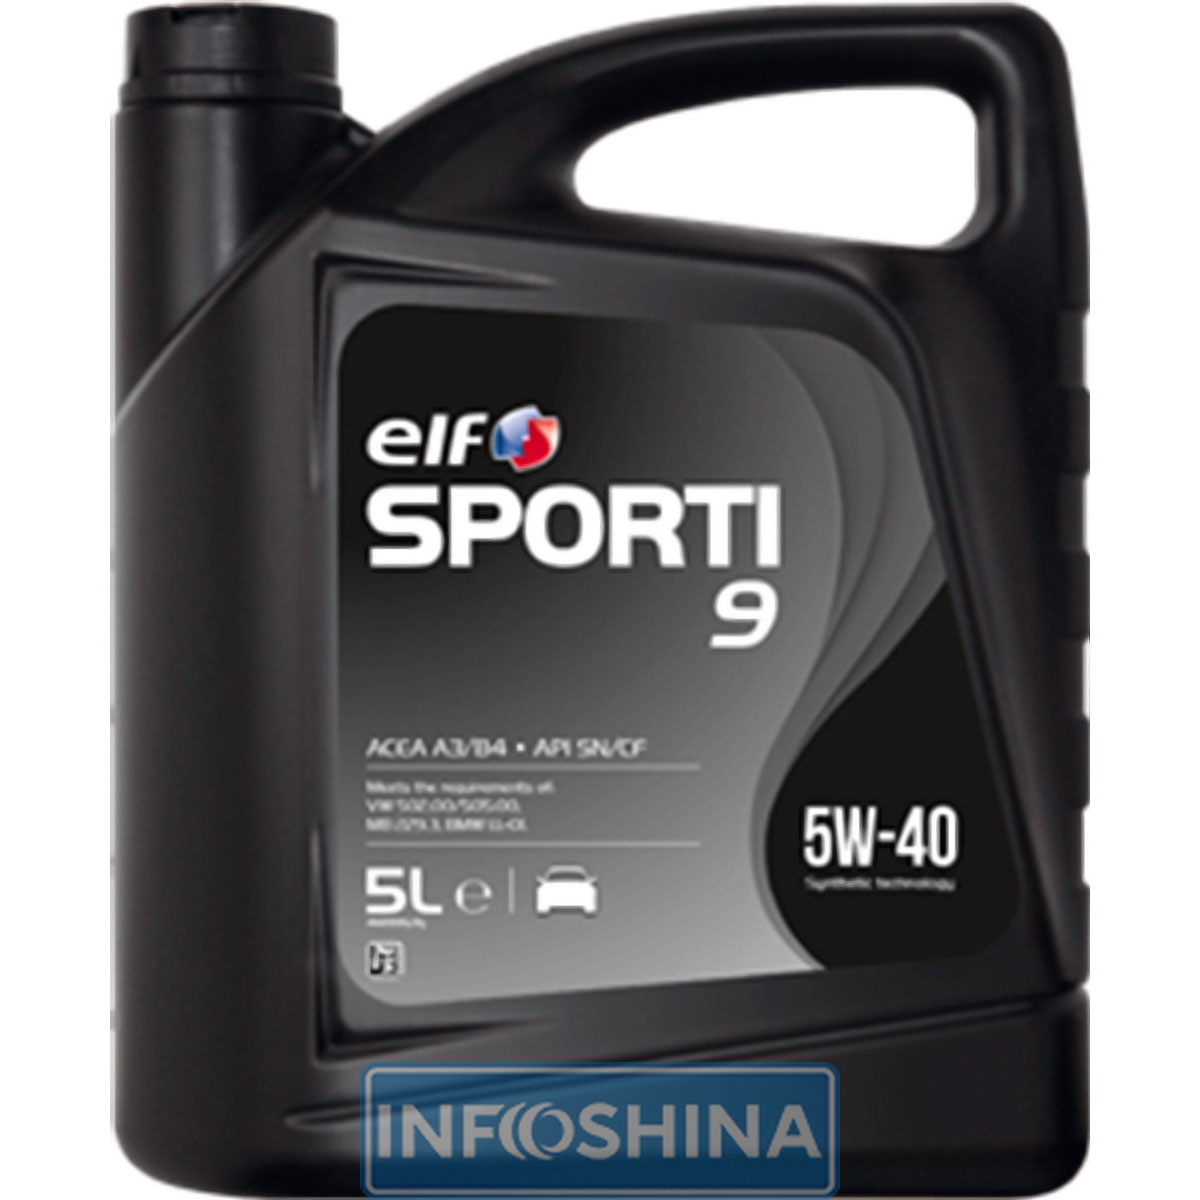 Купить масло ELF Sporti 9 5W-40 (5л)